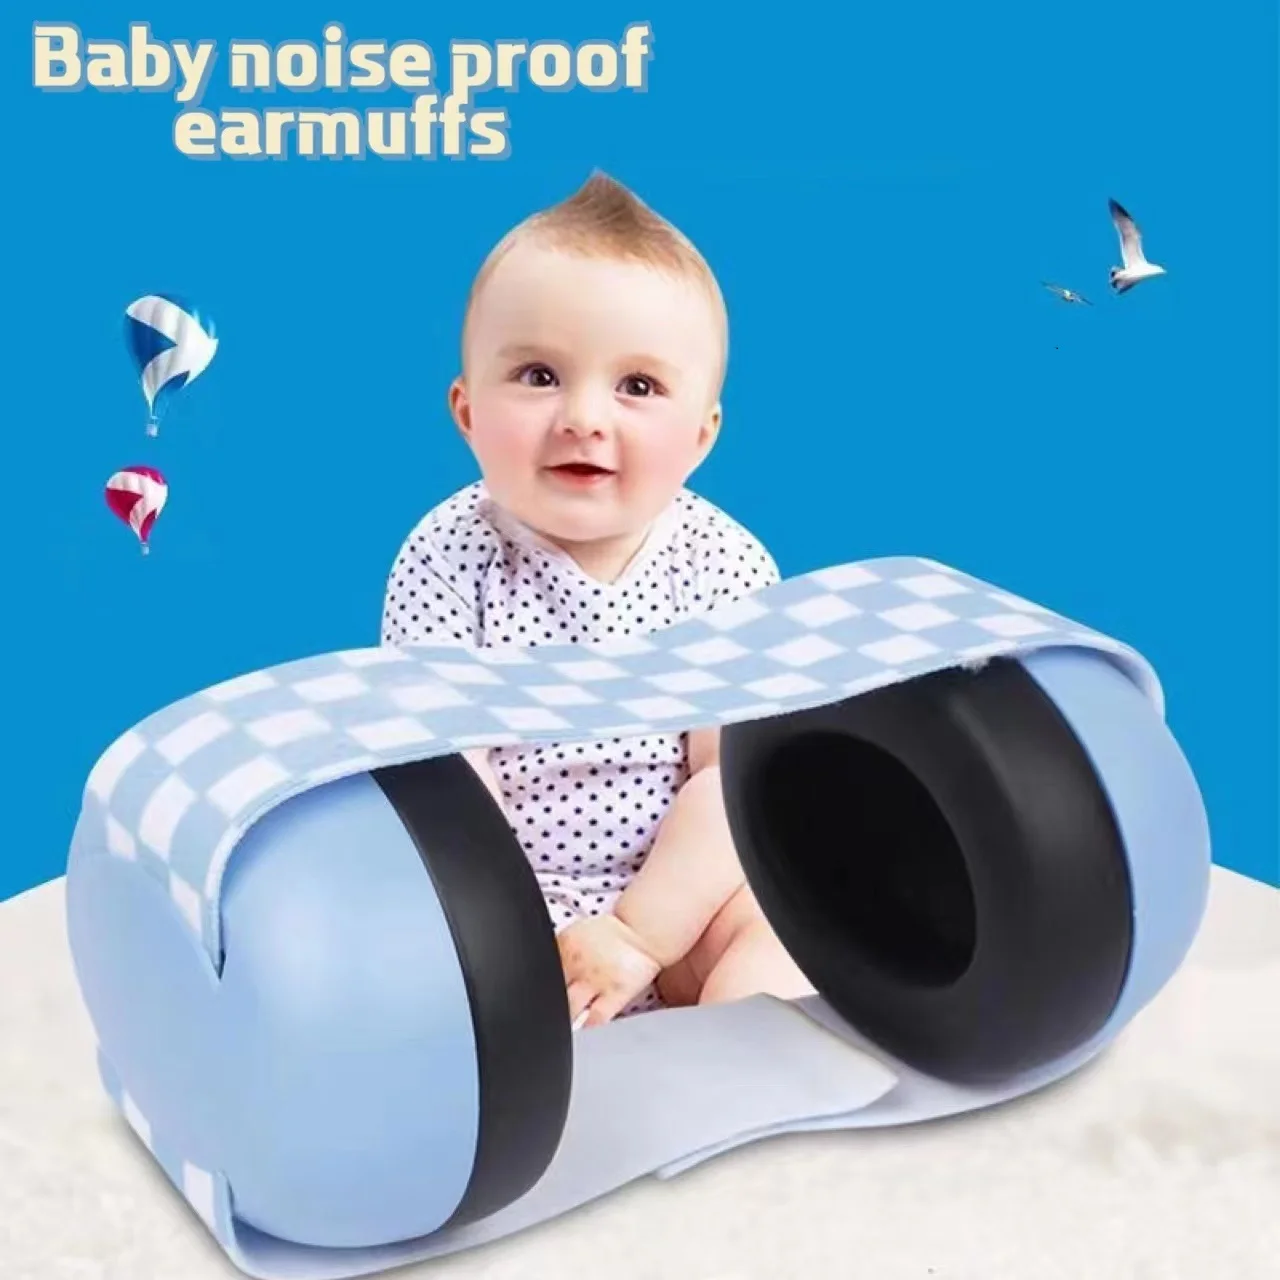 Noise-Proof Earmuffs For Newborns Noise-Proof Sleep Earmuffs Noise-Reducing Db Aircraft Noise-Reducing Sleep Earplugs Travel Ear